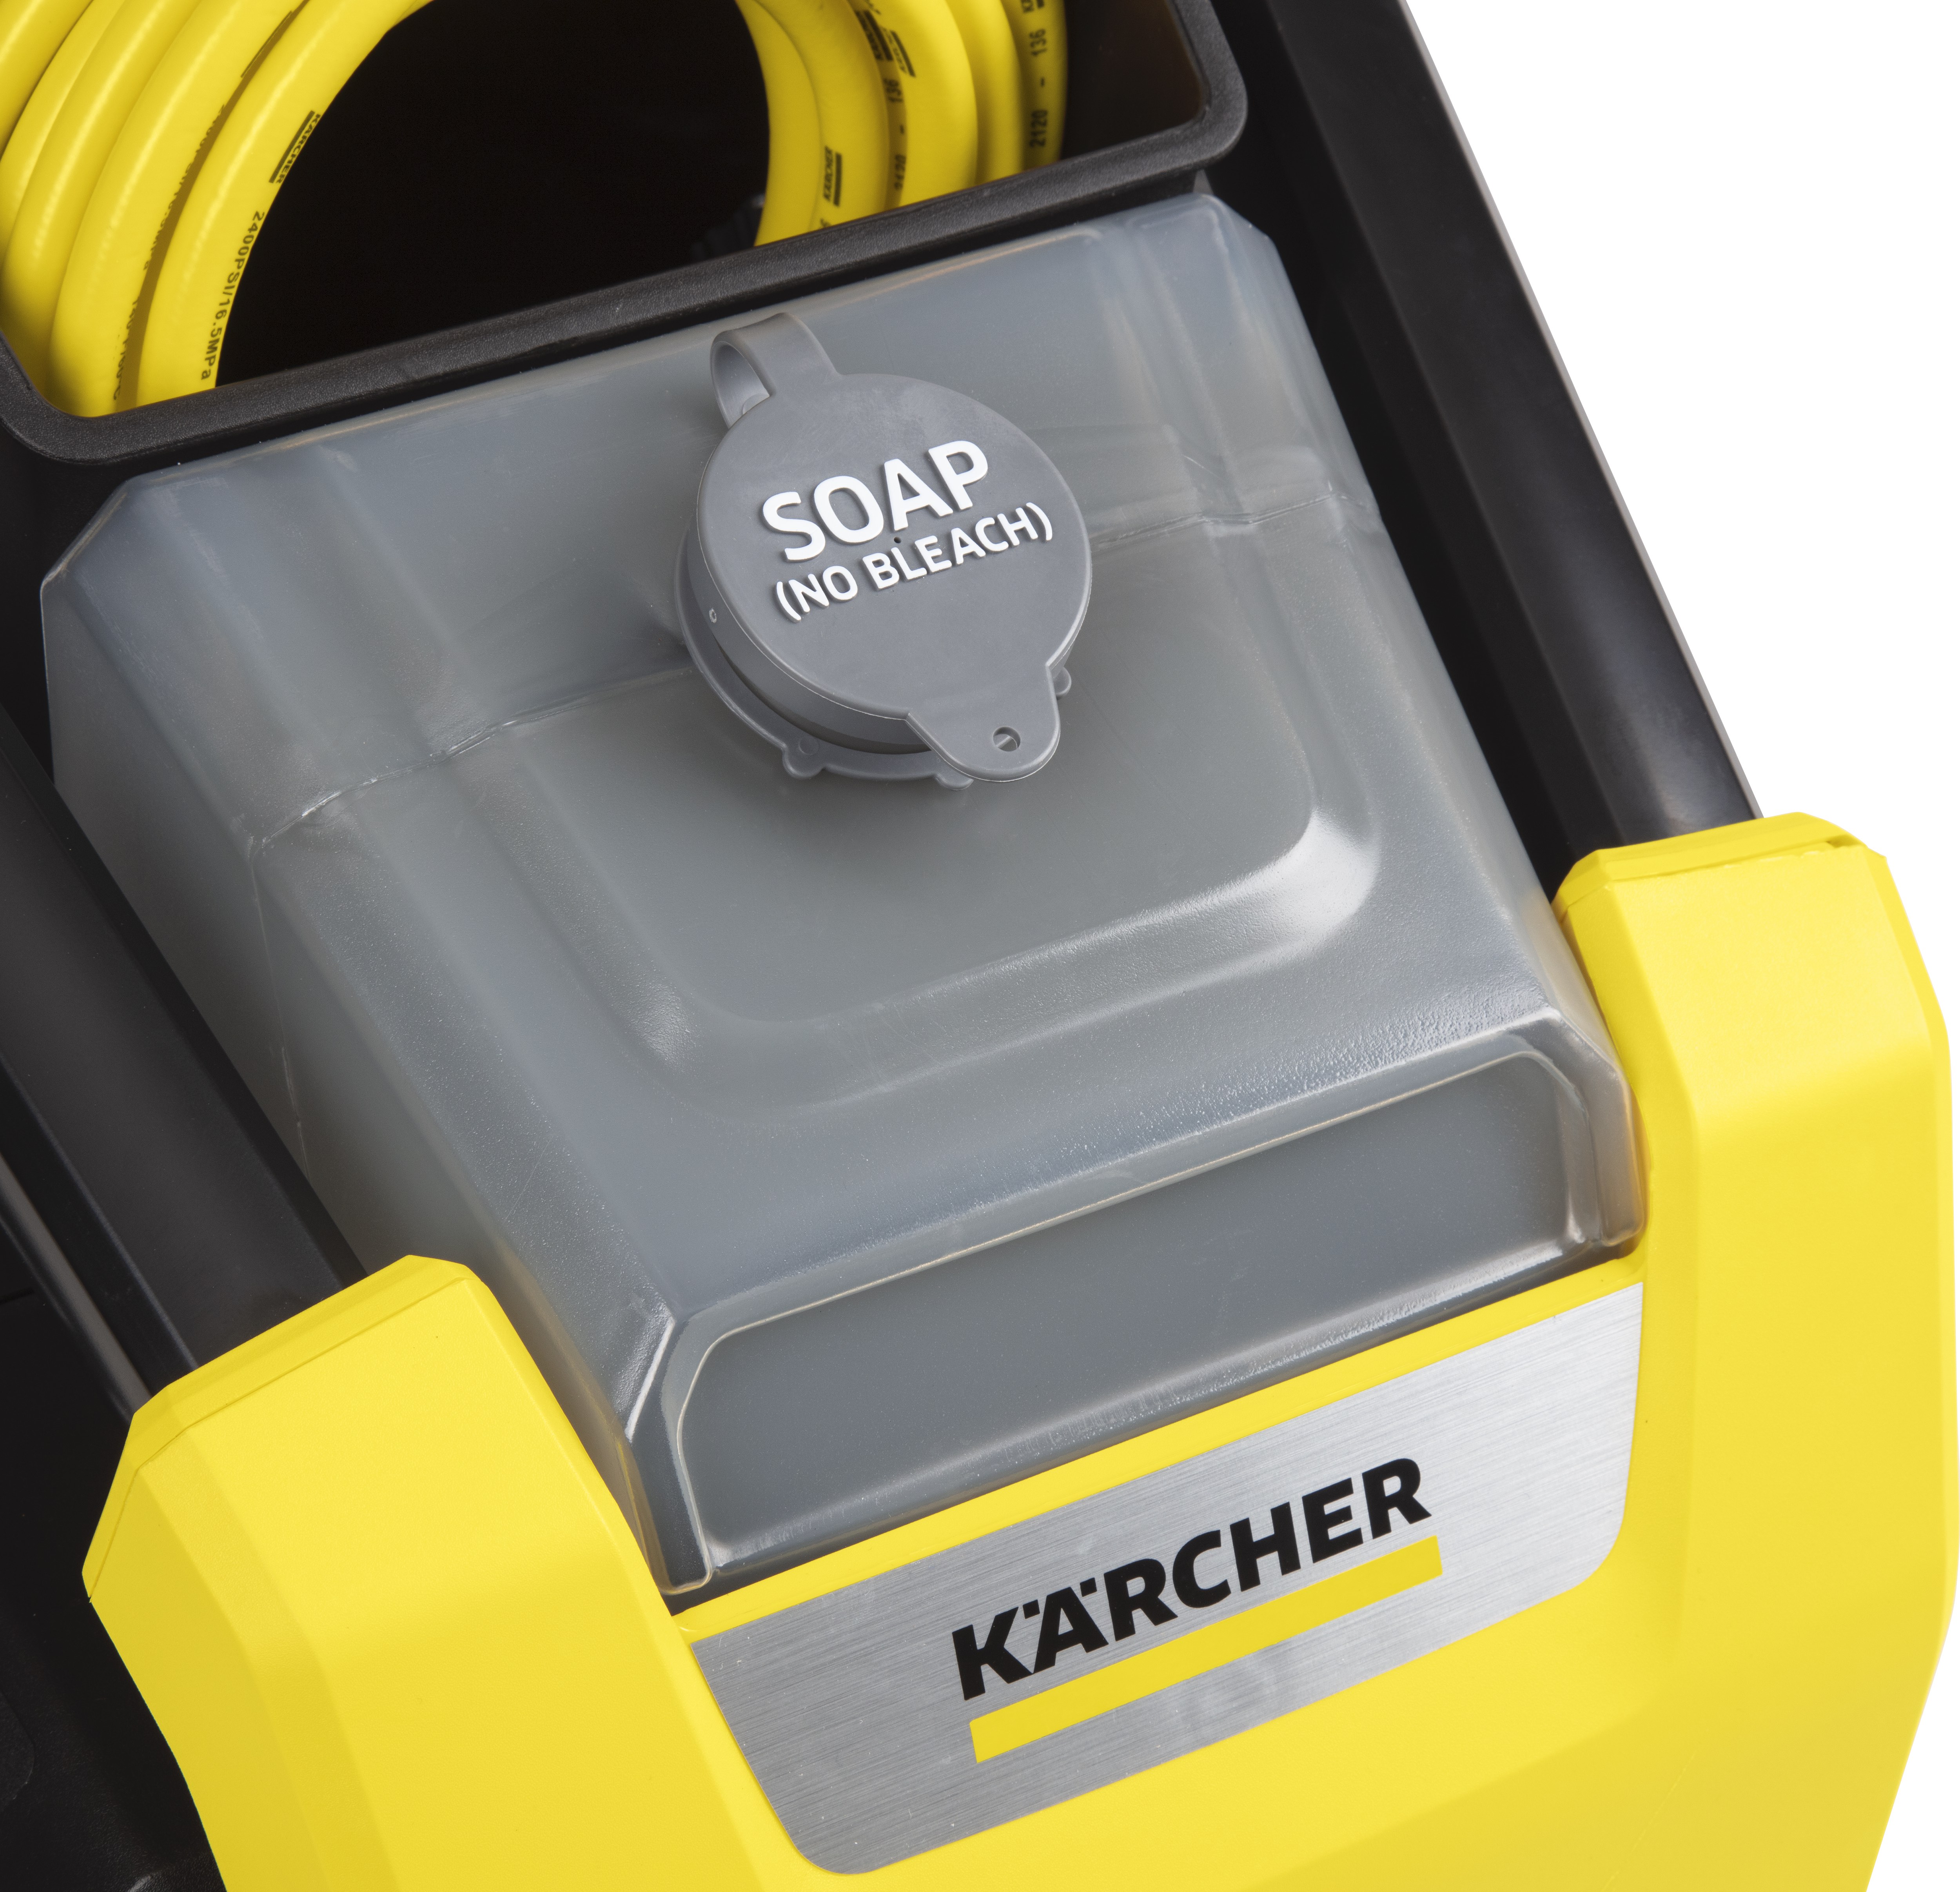 Original Karcher K2 Pressure Washer Parts & Accessories in Good Used  Condition